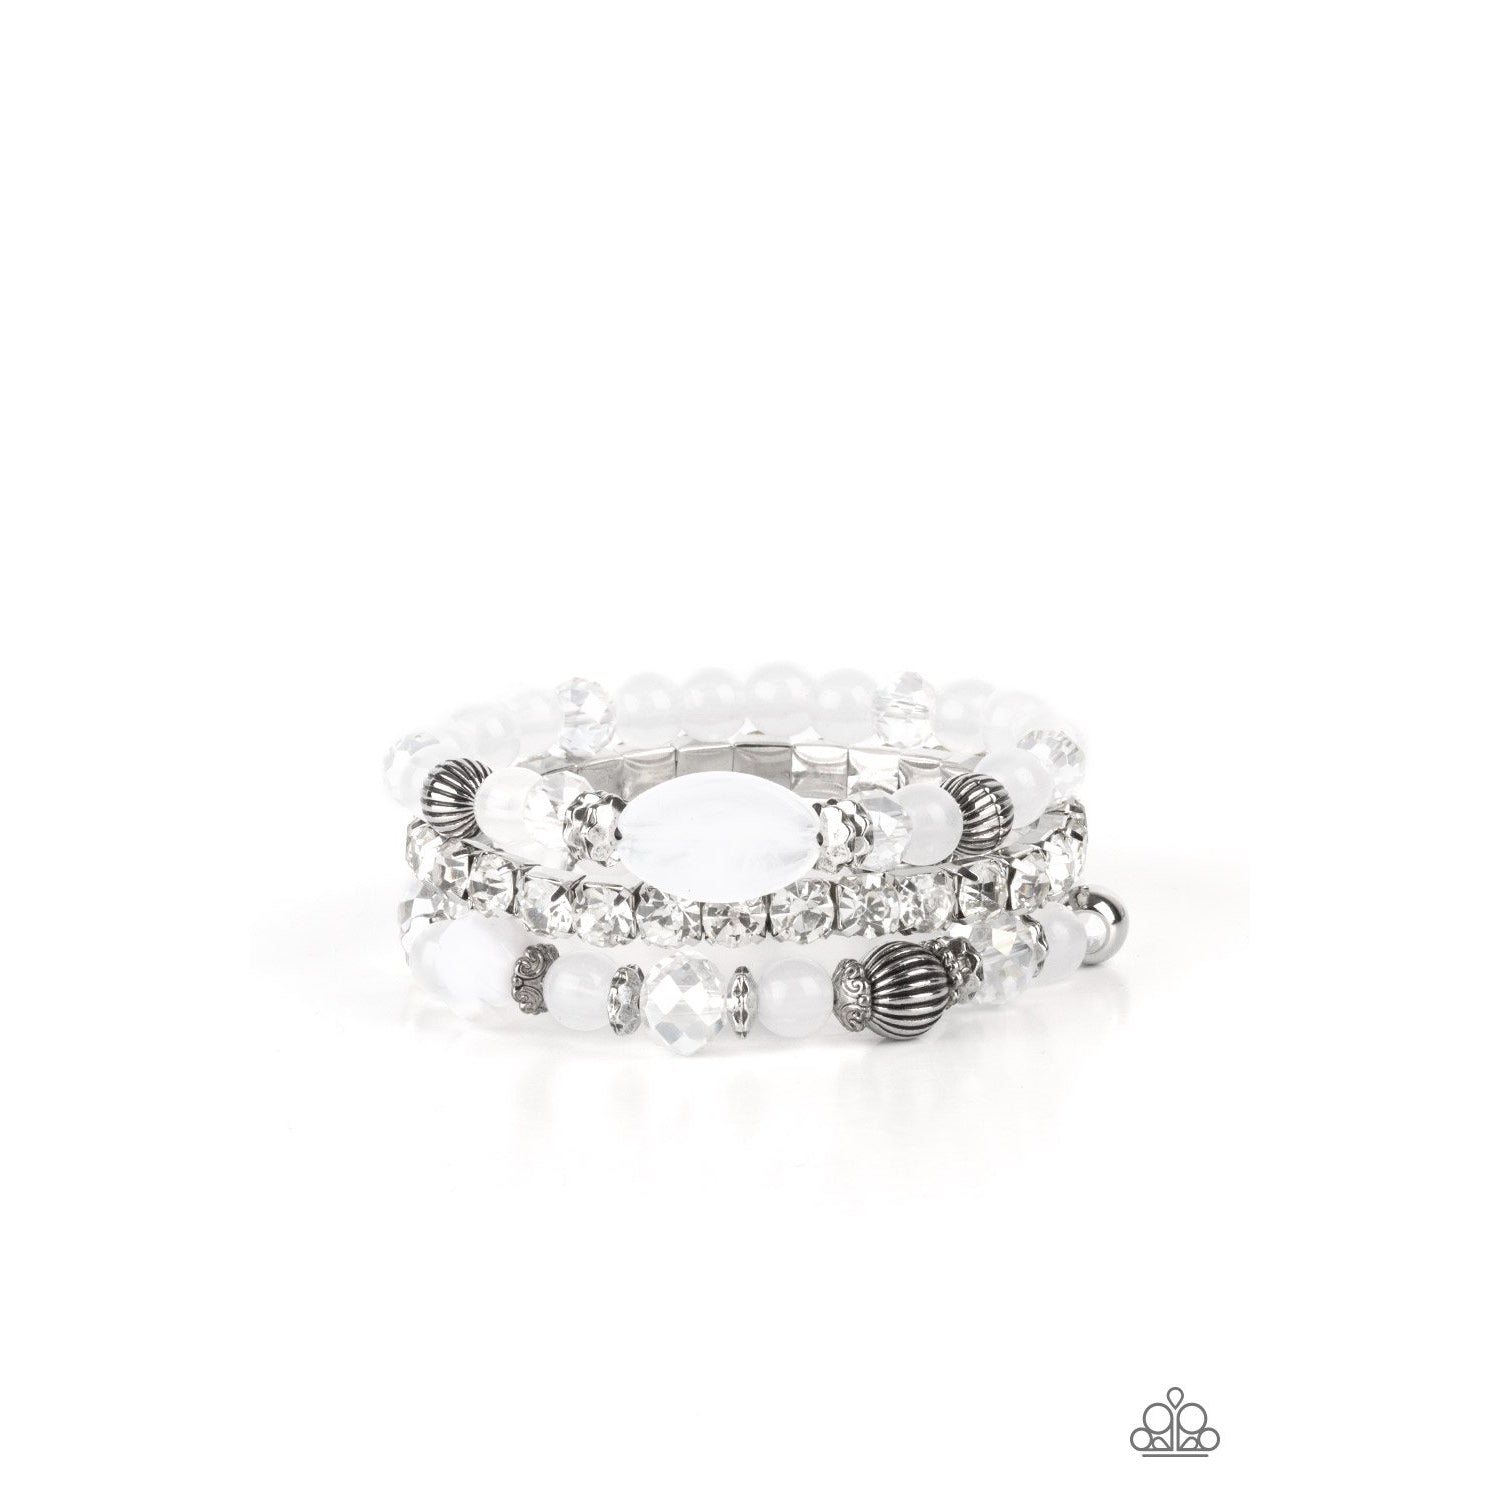 Ethereal Etiquette - White Rhinestone Bracelet - Paparazzi Accessories - GlaMarous Titi Jewels